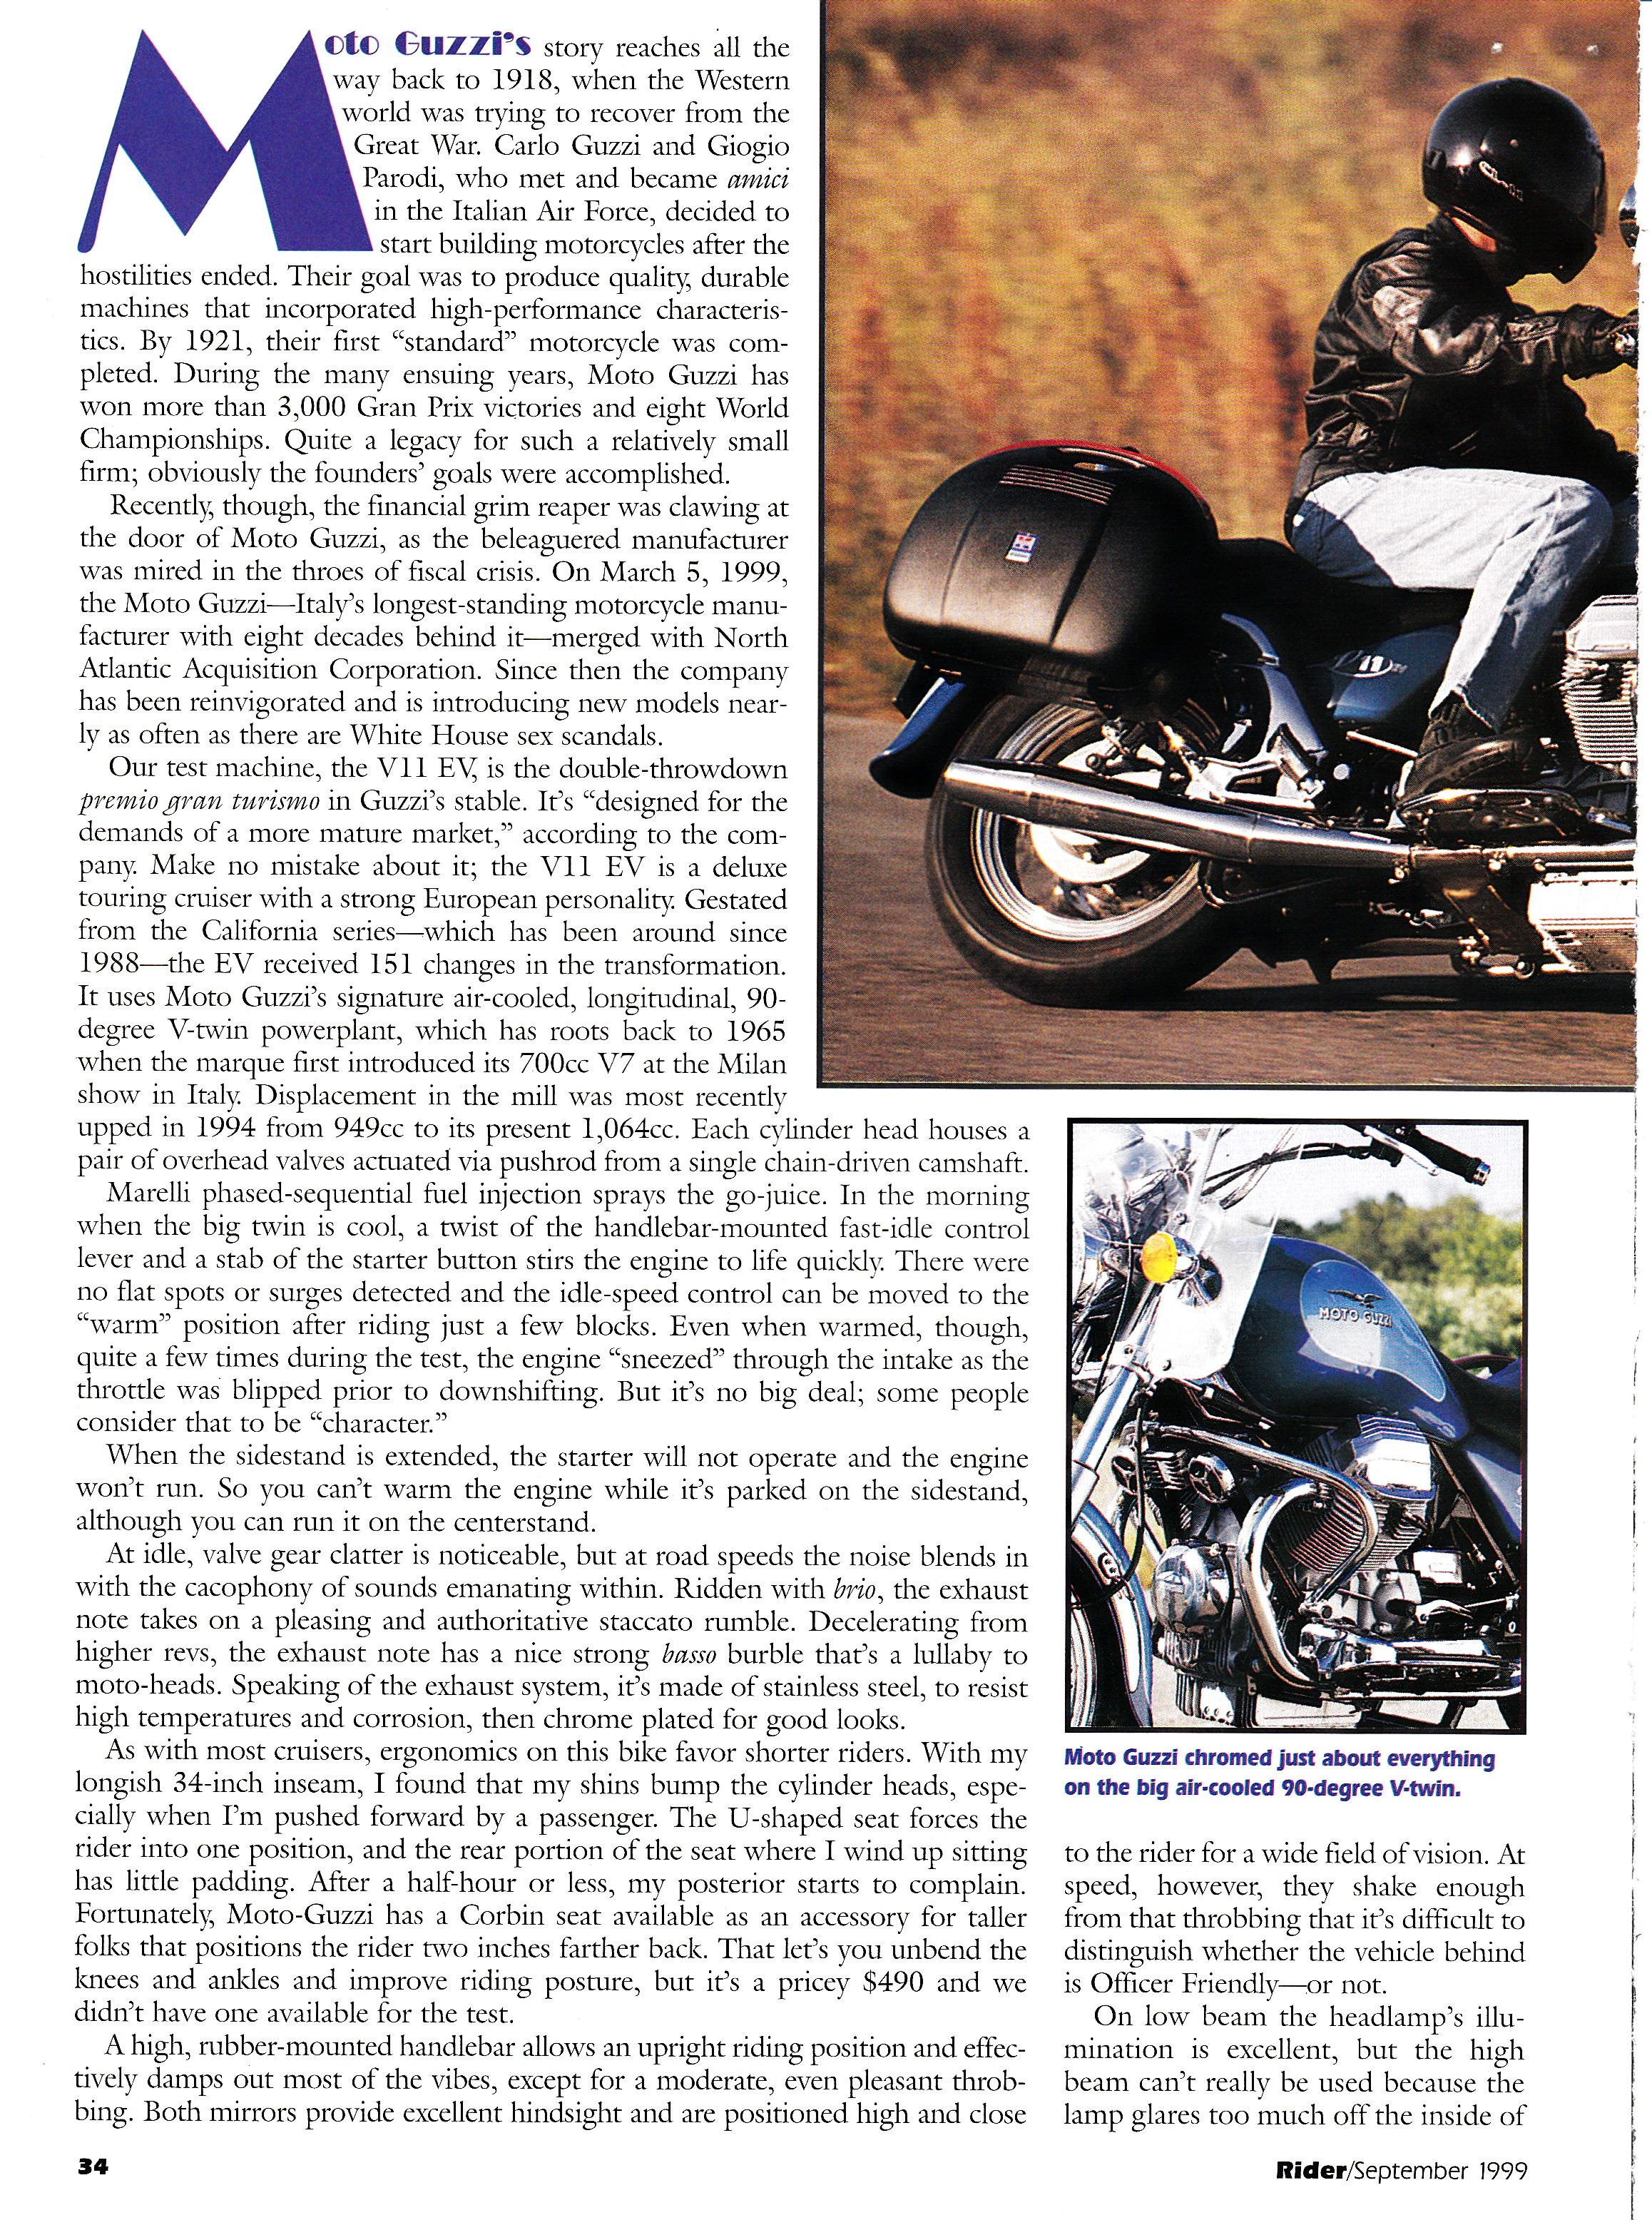 Article - Rider (1999 September) La bella macchina: The 1999 Moto Guzzi California V11 EV.